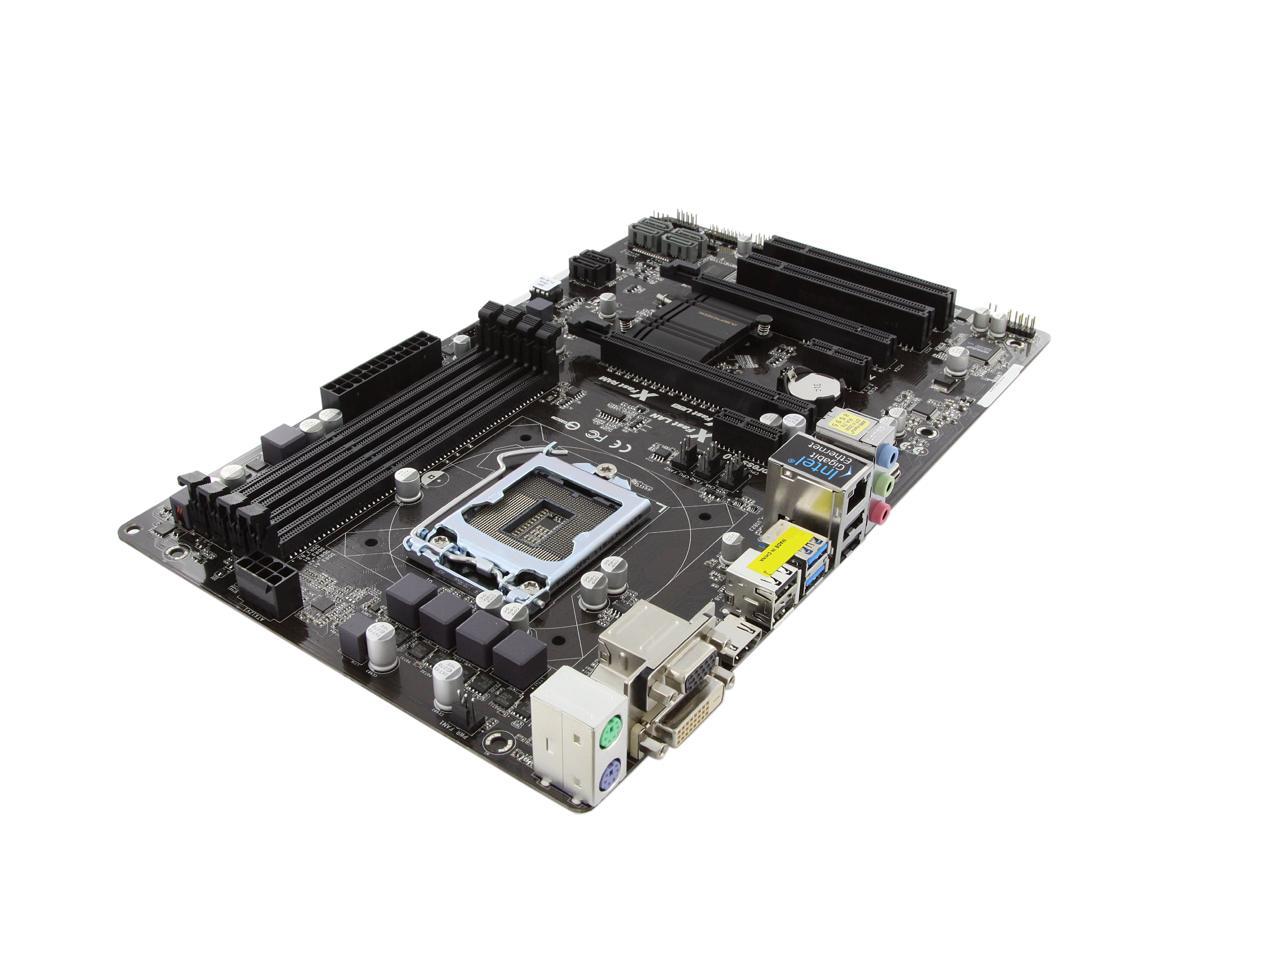 ASRock B85 Pro4 LGA 1150 ATX Intel Motherboard - Newegg.com